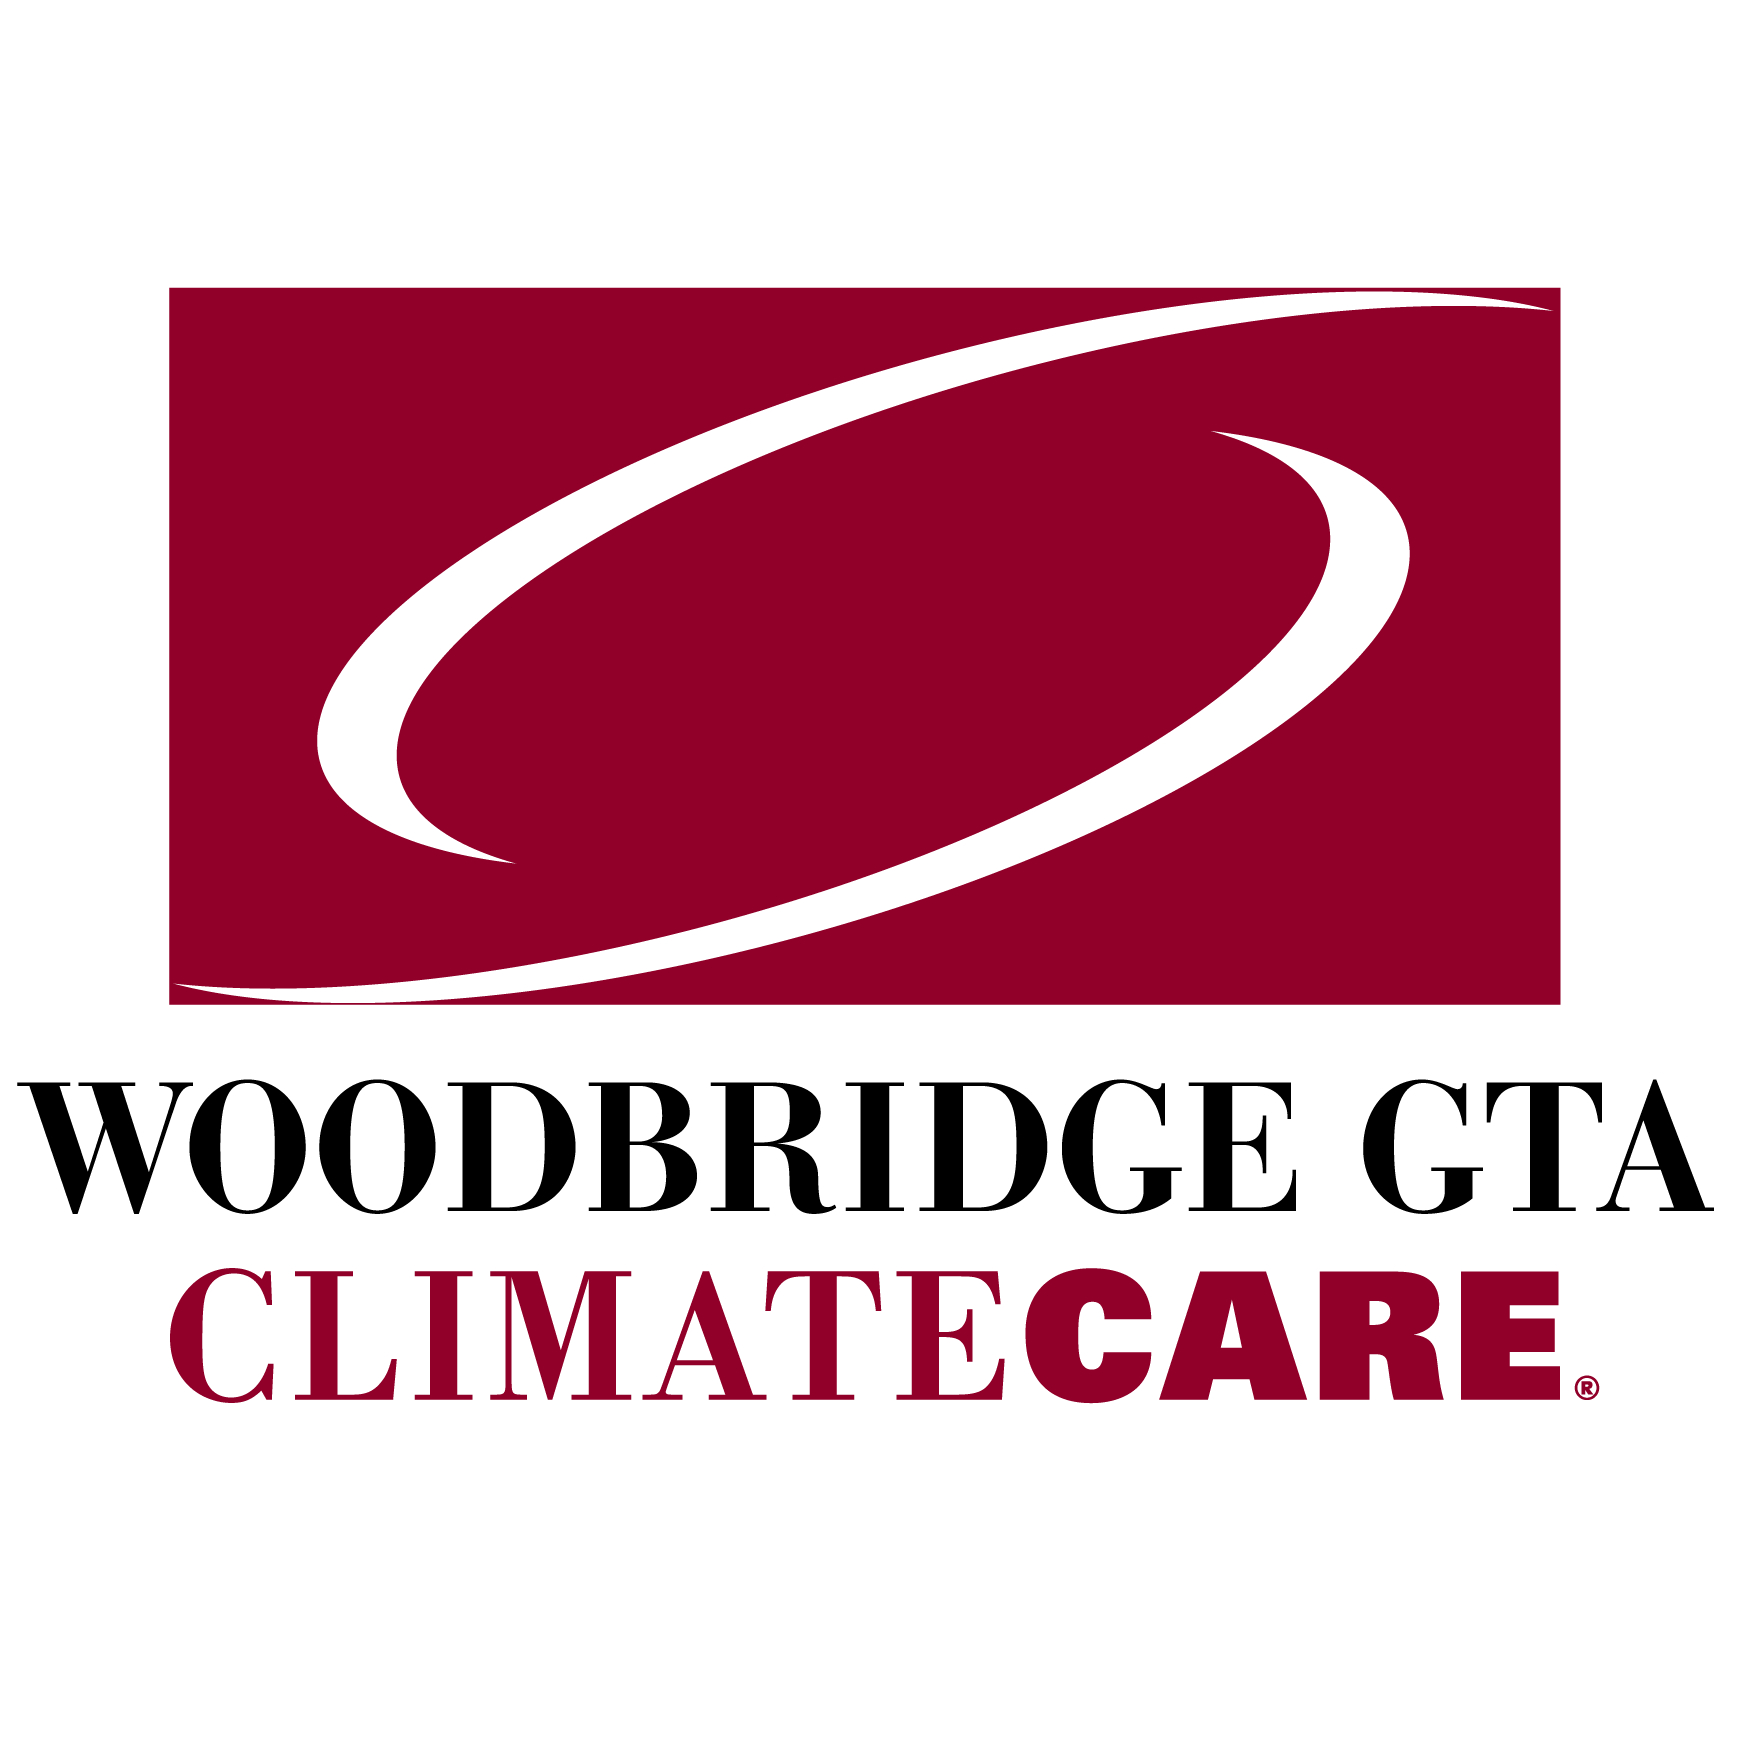 Woodbridge GTA ClimateCare - Entrepreneurs en chauffage